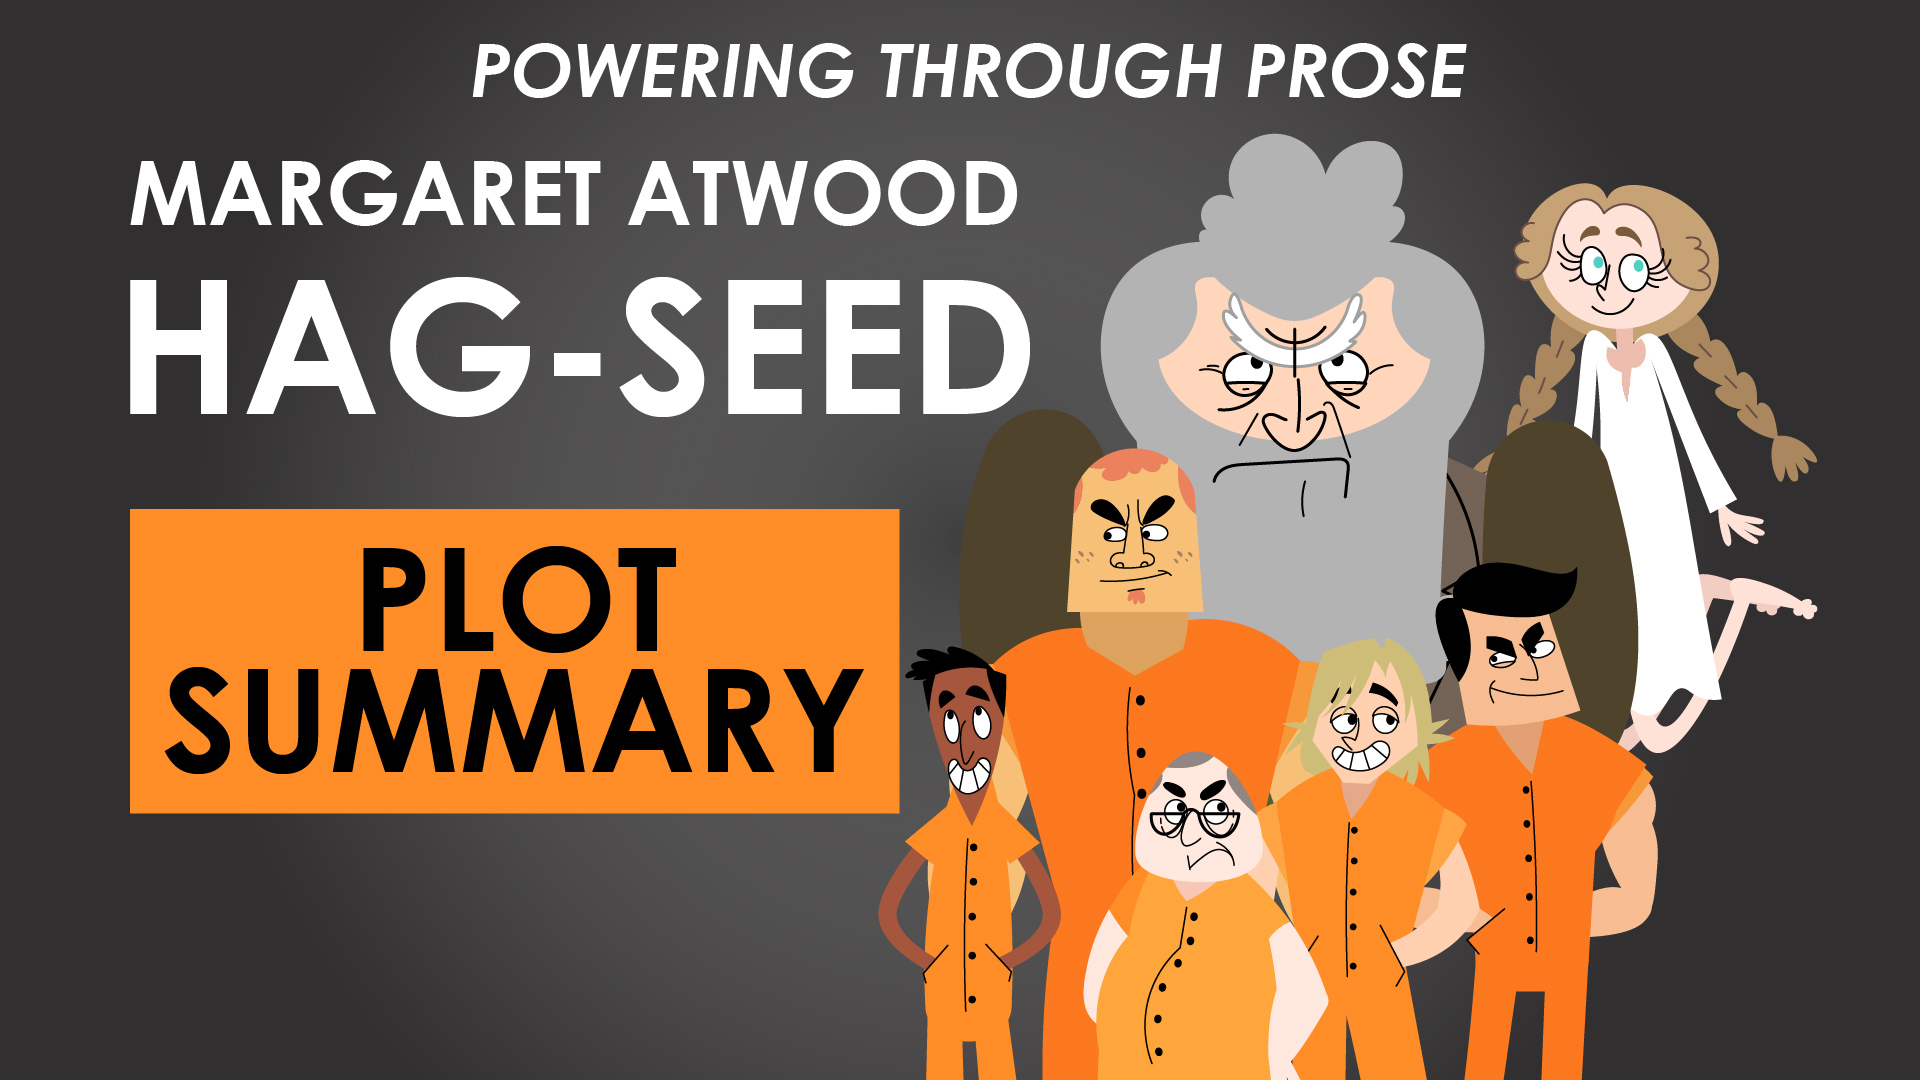 Hag-Seed - Margaret Atwood - Plot Summary - Powering through Prose Series 